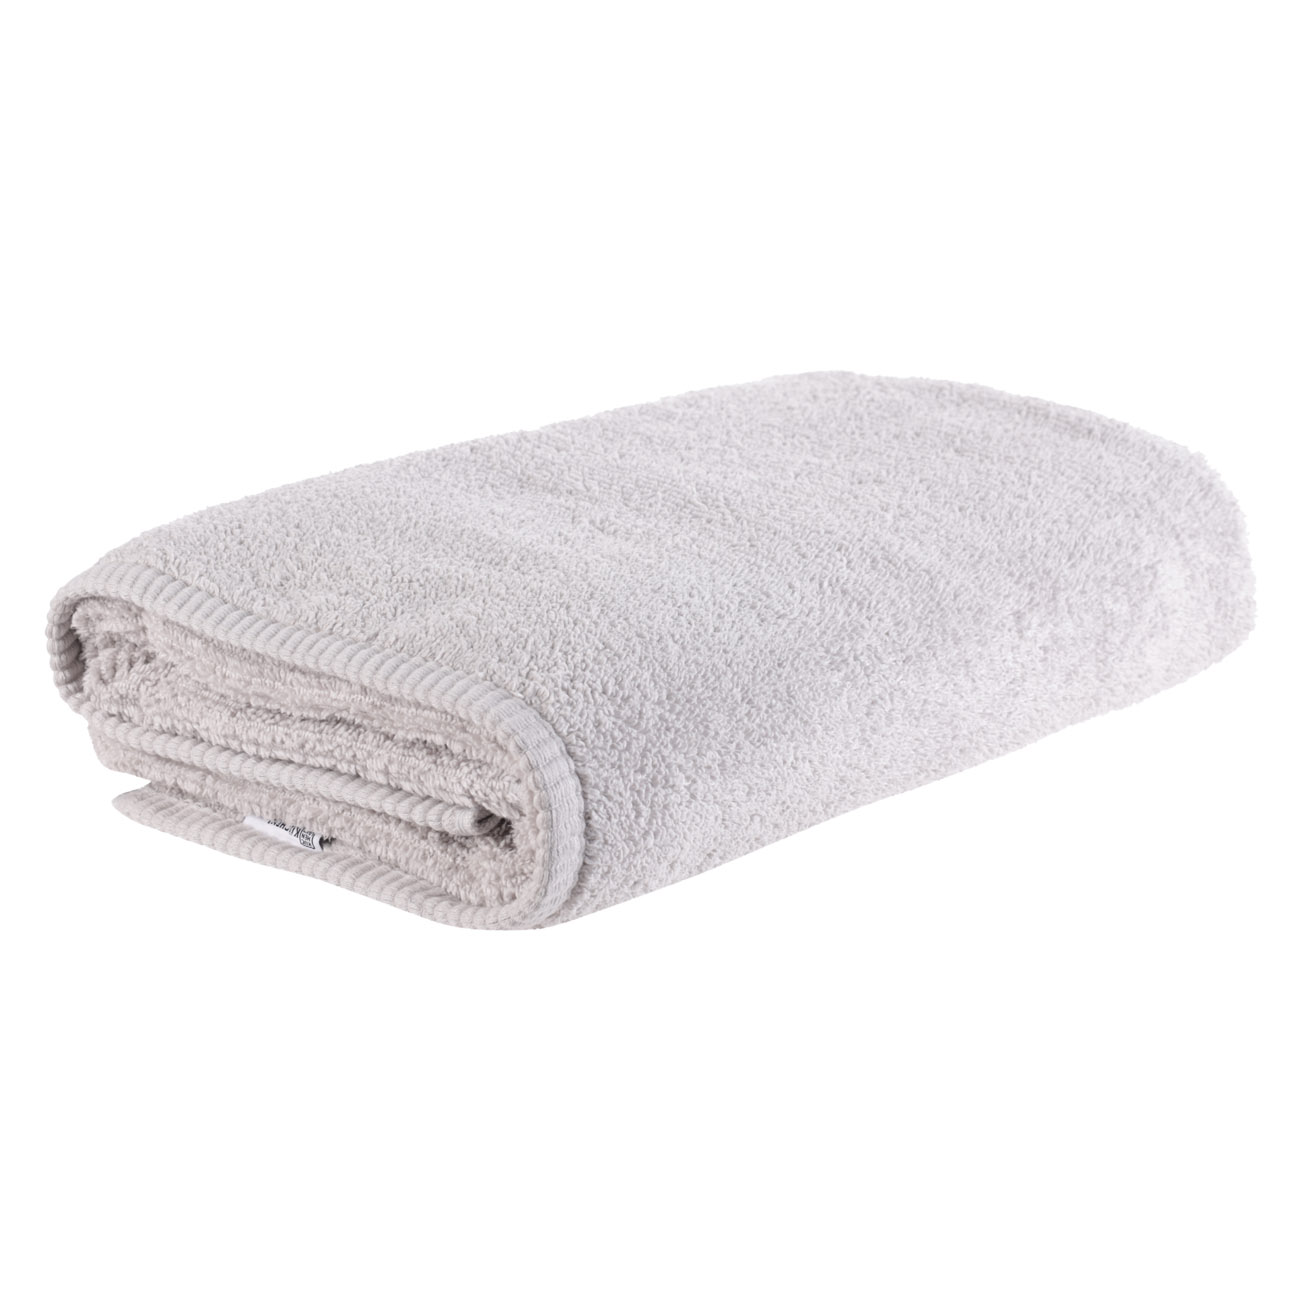 Towel, 70x140 cm, cotton, light gray, Terry cotton изображение № 2